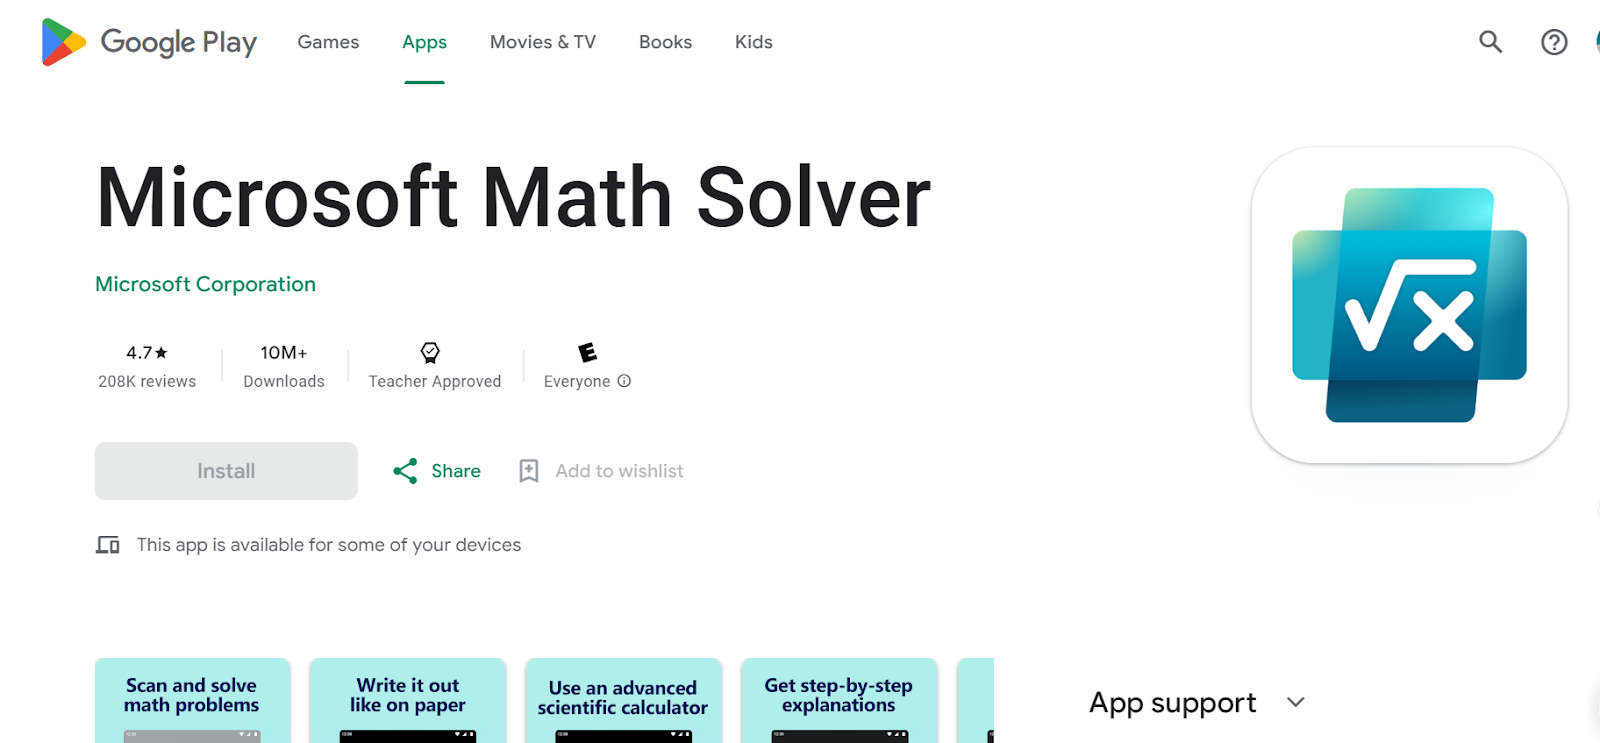 2. Microsoft Math Solver